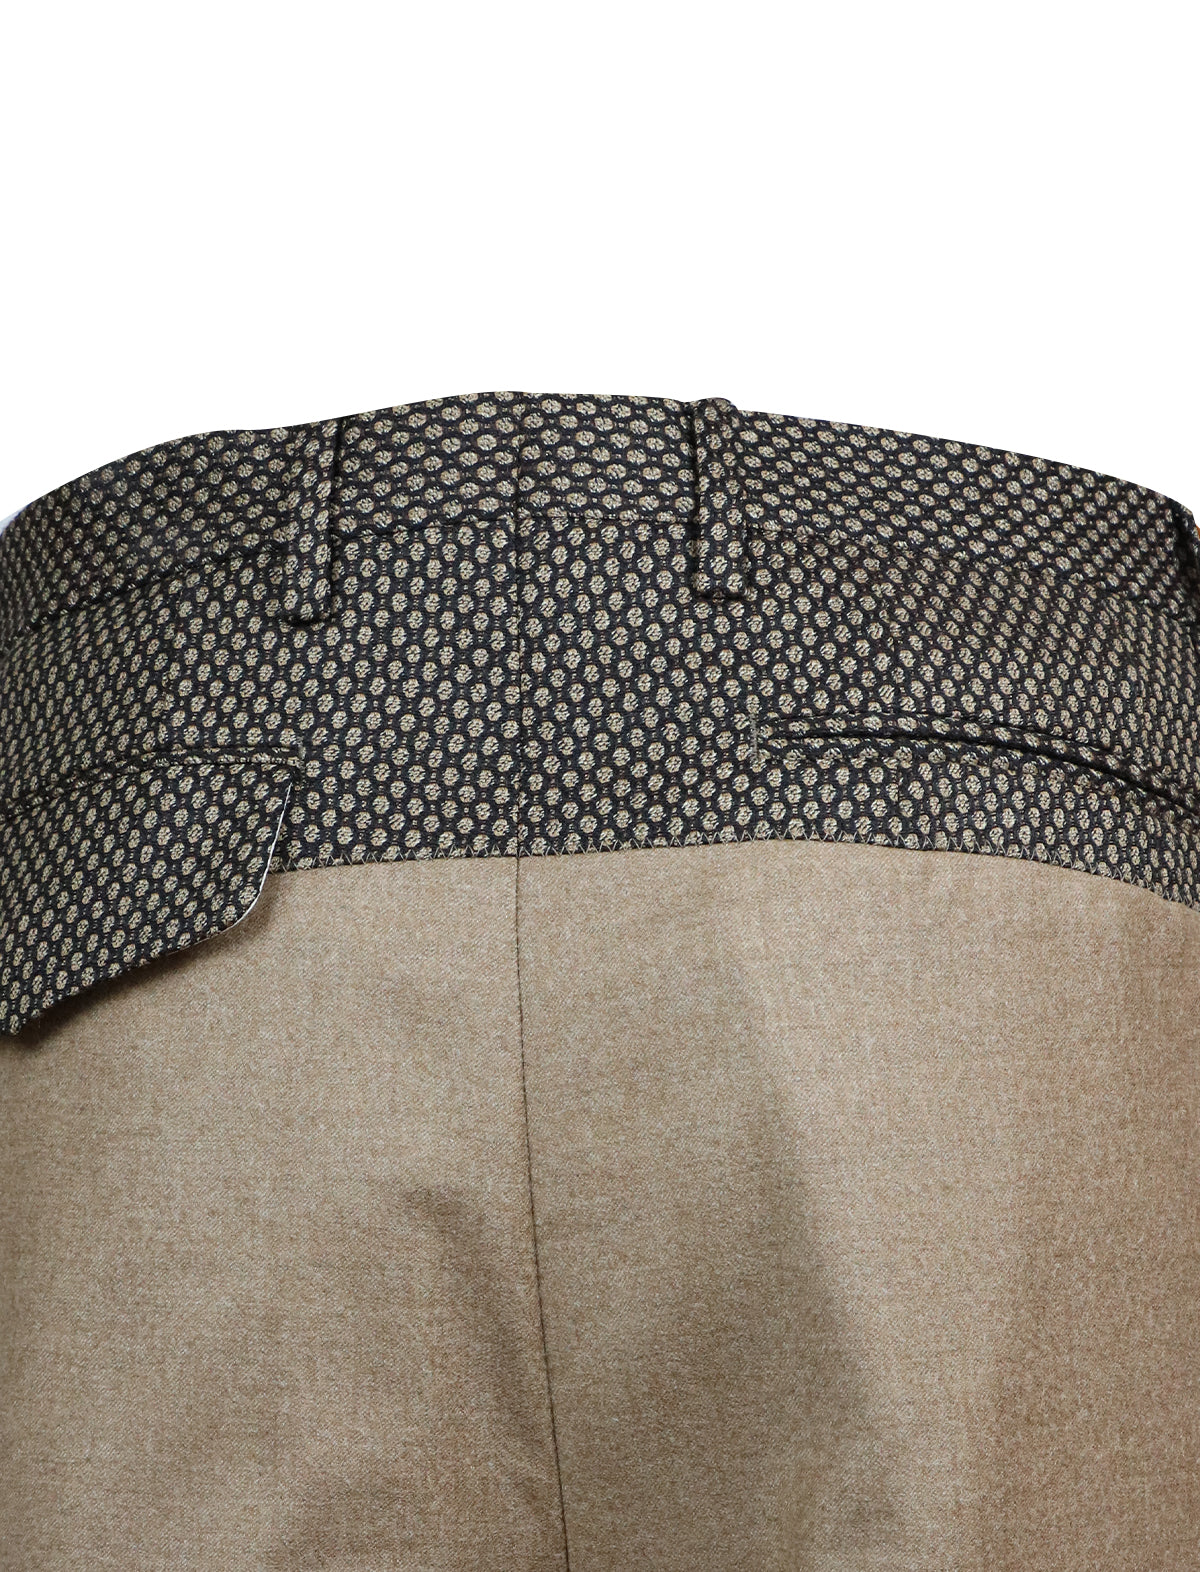 Gabriele Pasini Two-Tone Trouser in Light Brown